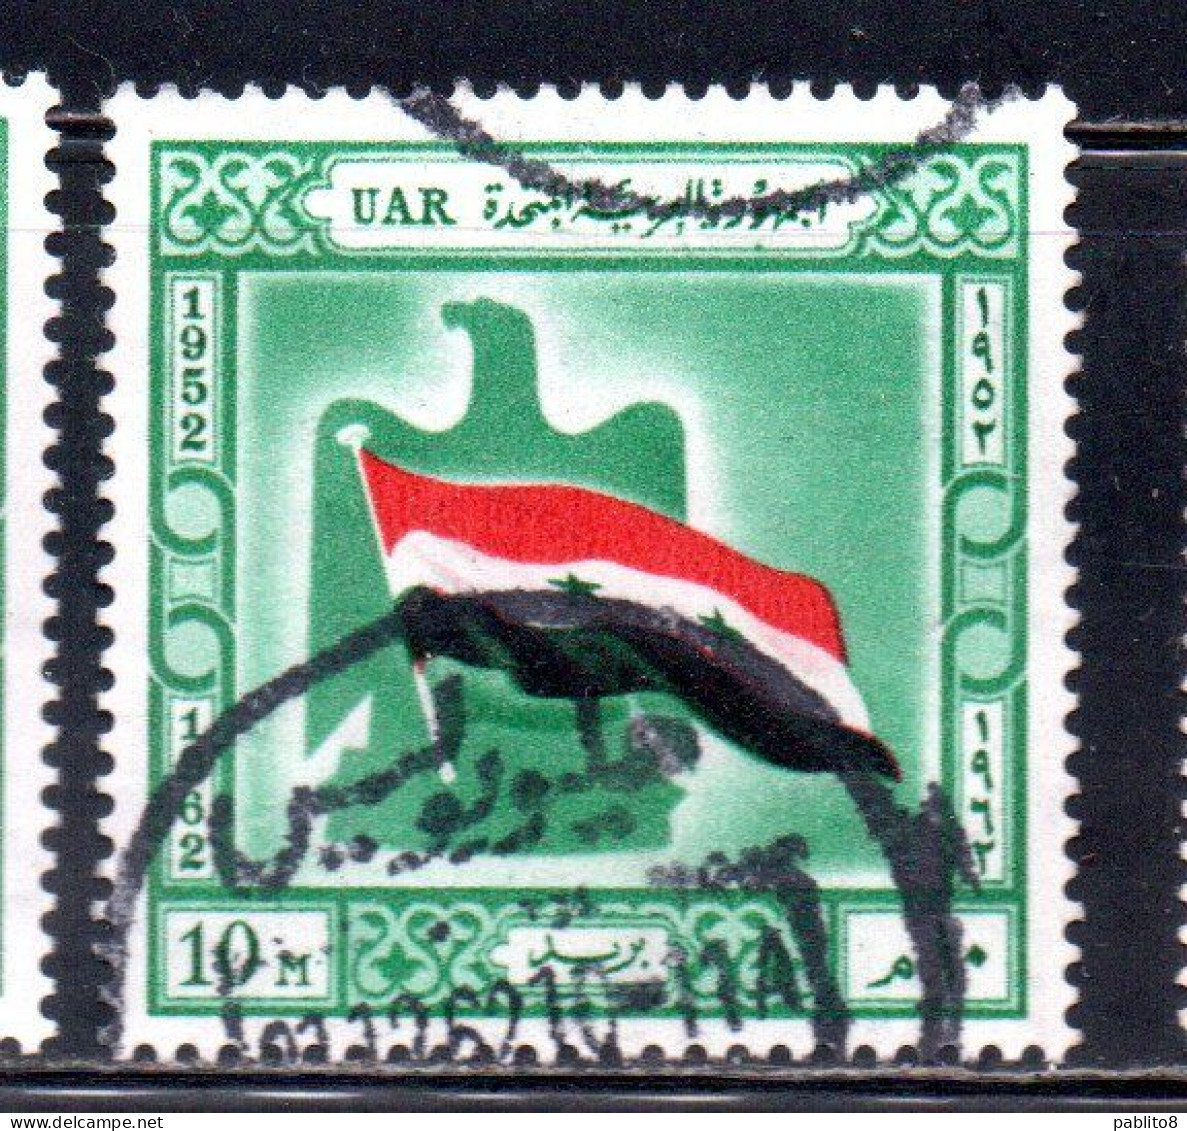 UAR EGYPT EGITTO 1962 BIRTH OF UAR FLAG AND EAGLE 10m USED USATO OBLITERE' - Usados